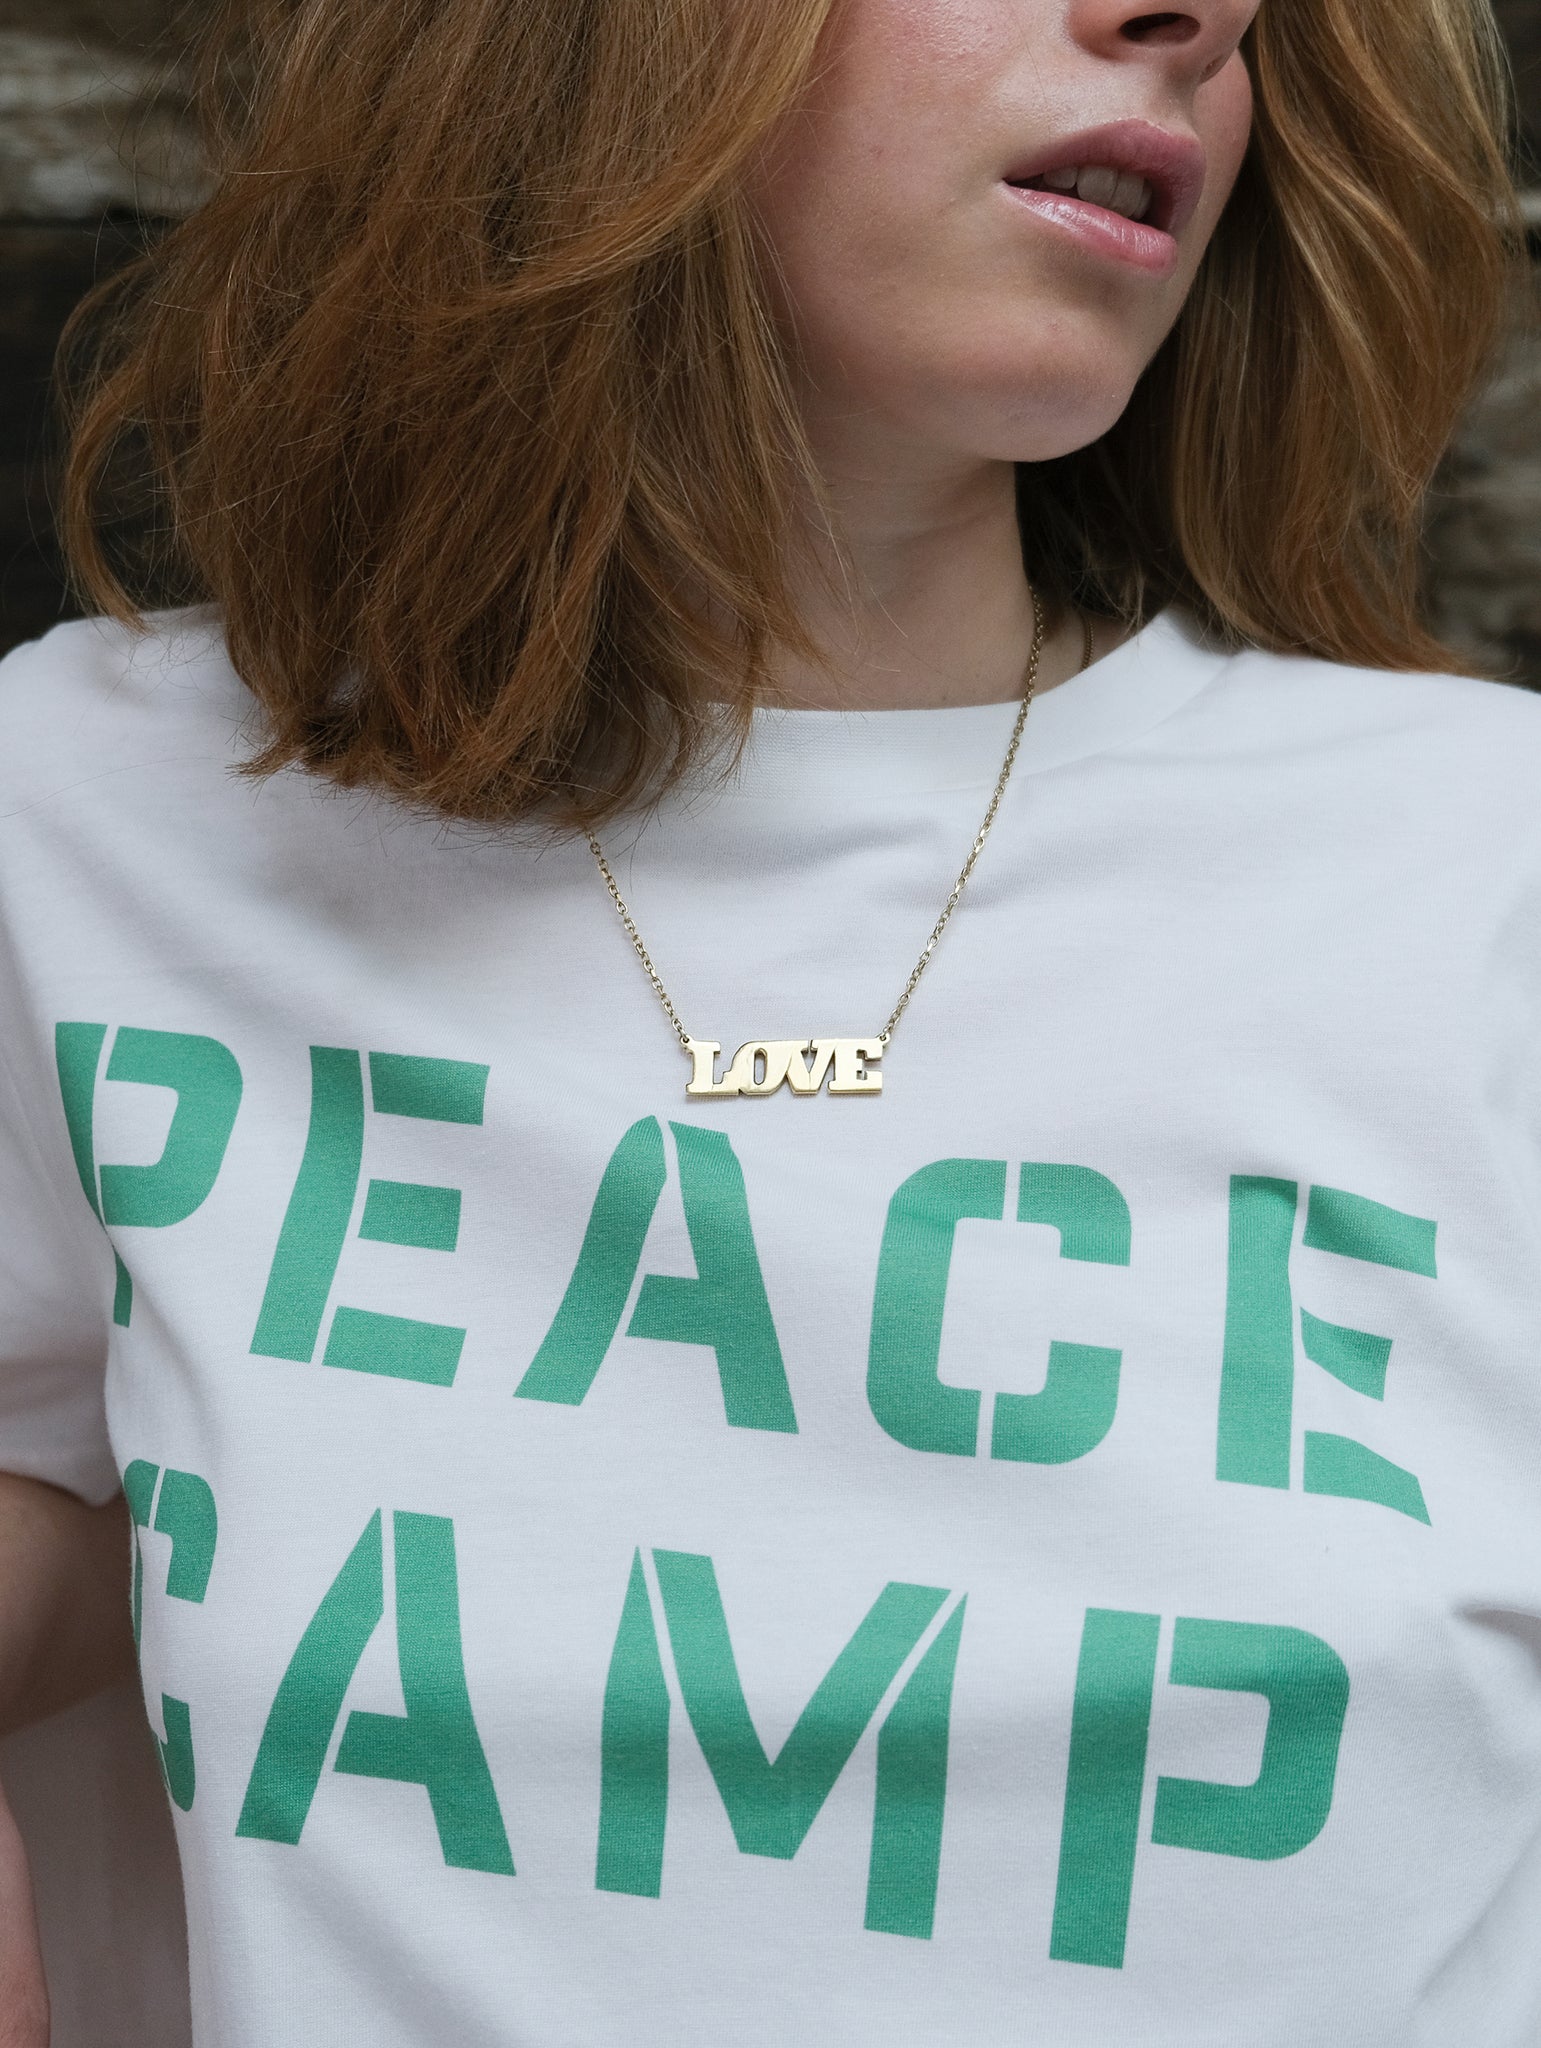 Peace camp t-shirt on soft organic cotton